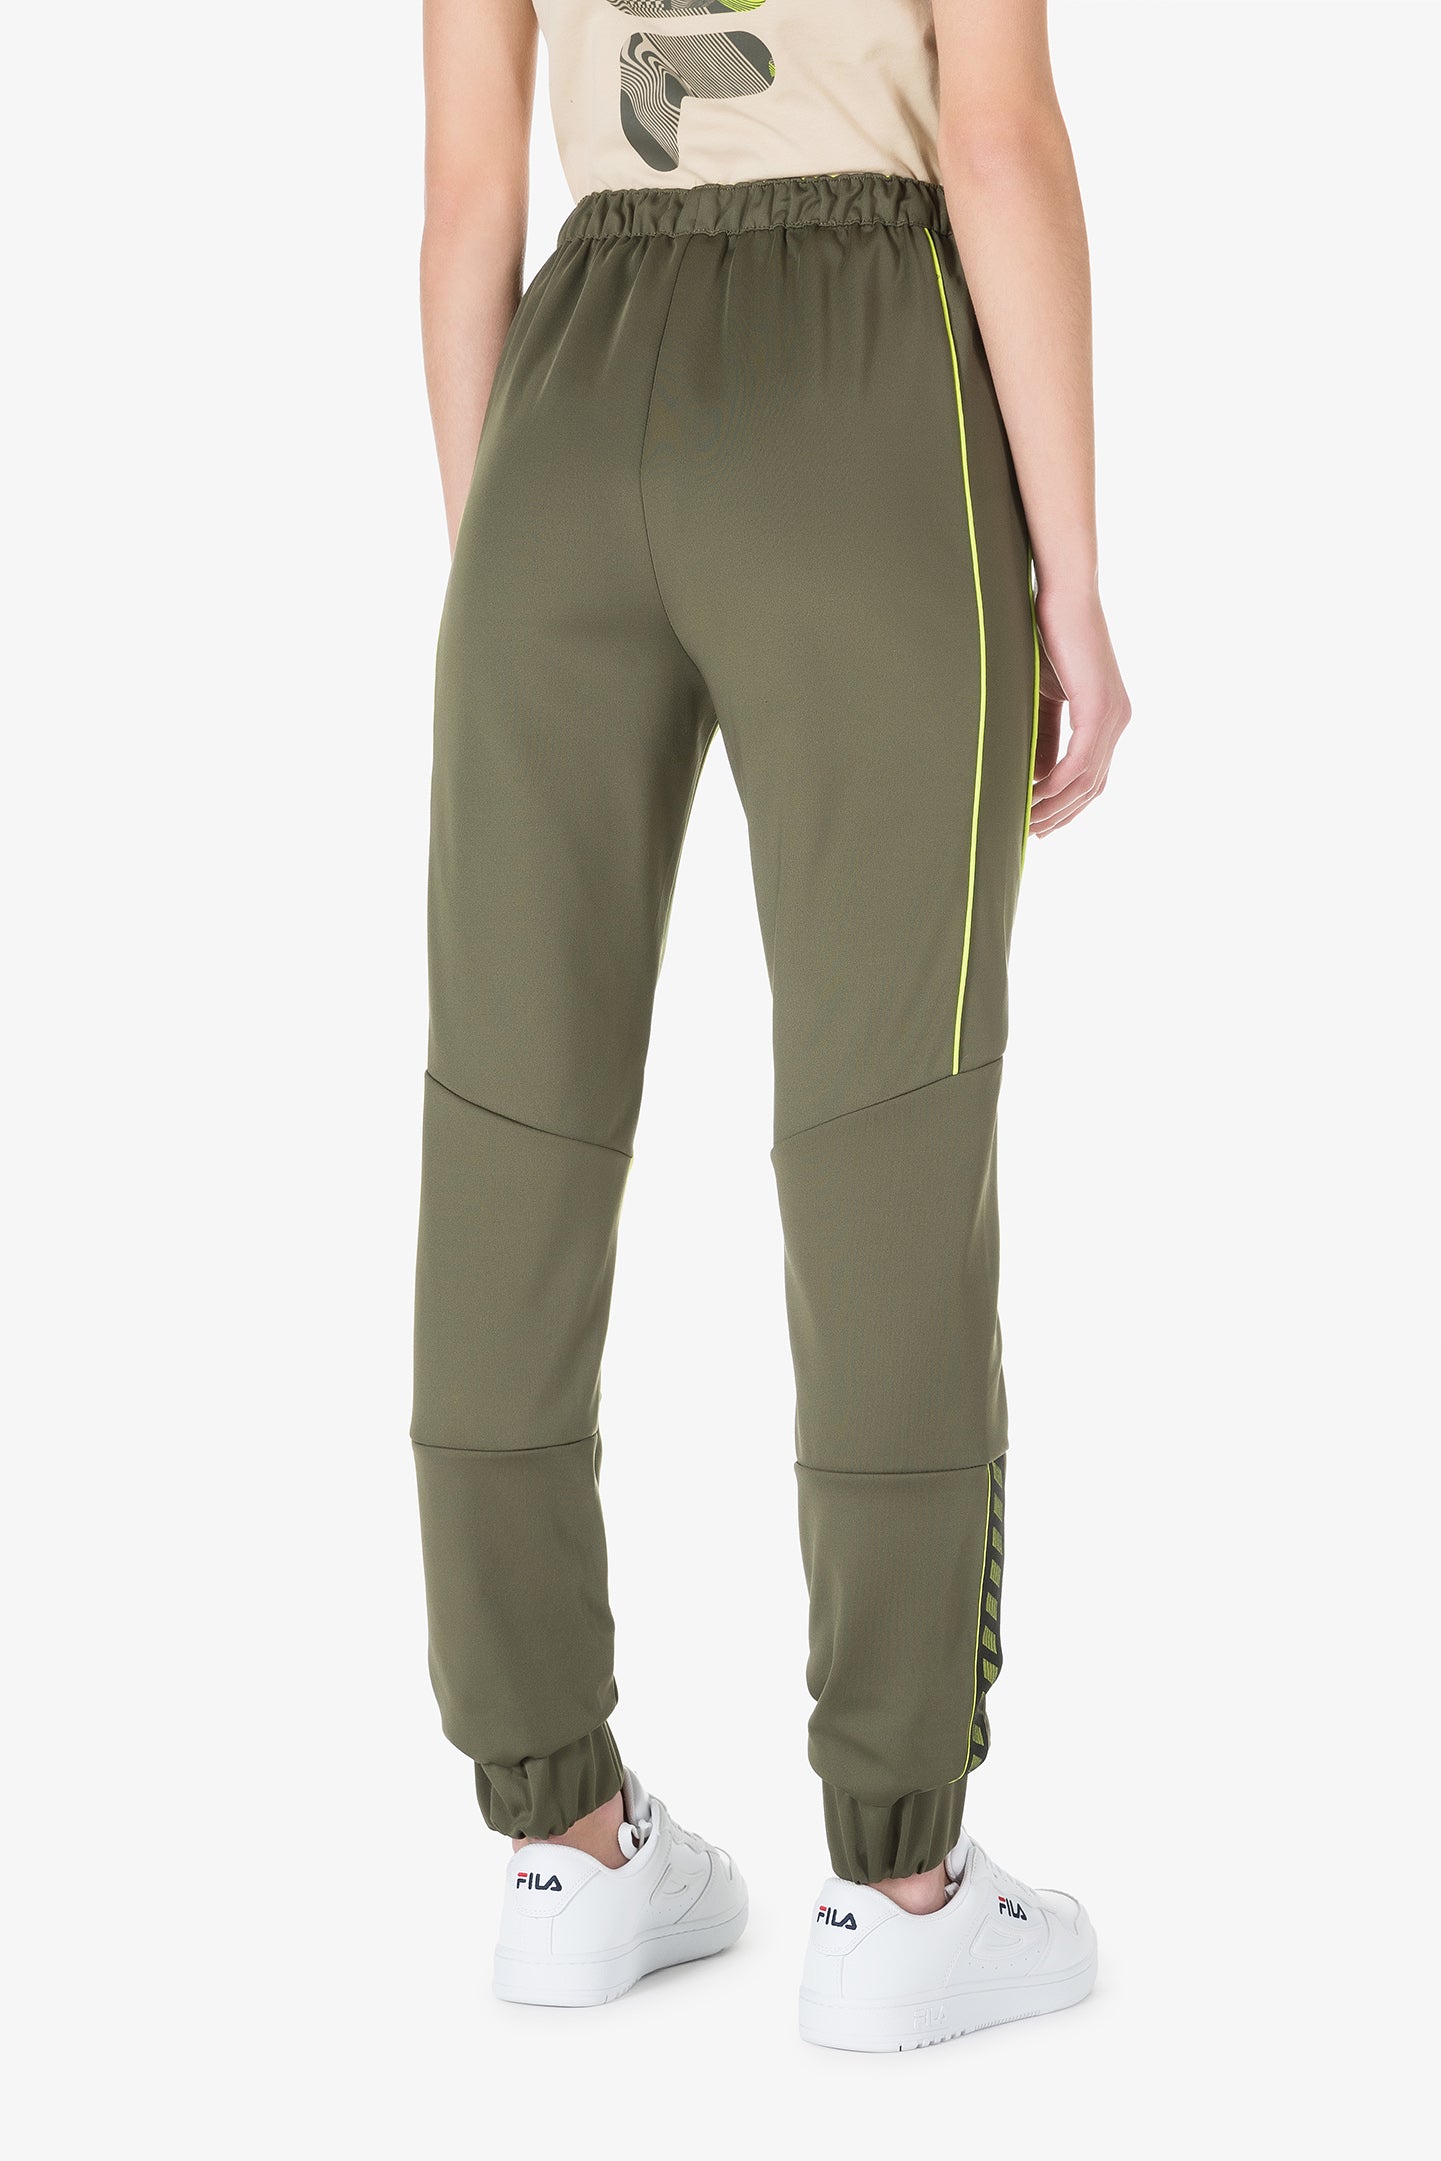 Buy FILA Grey Polyester Track Pants - Track Pants for Men 1426897 | Myntra